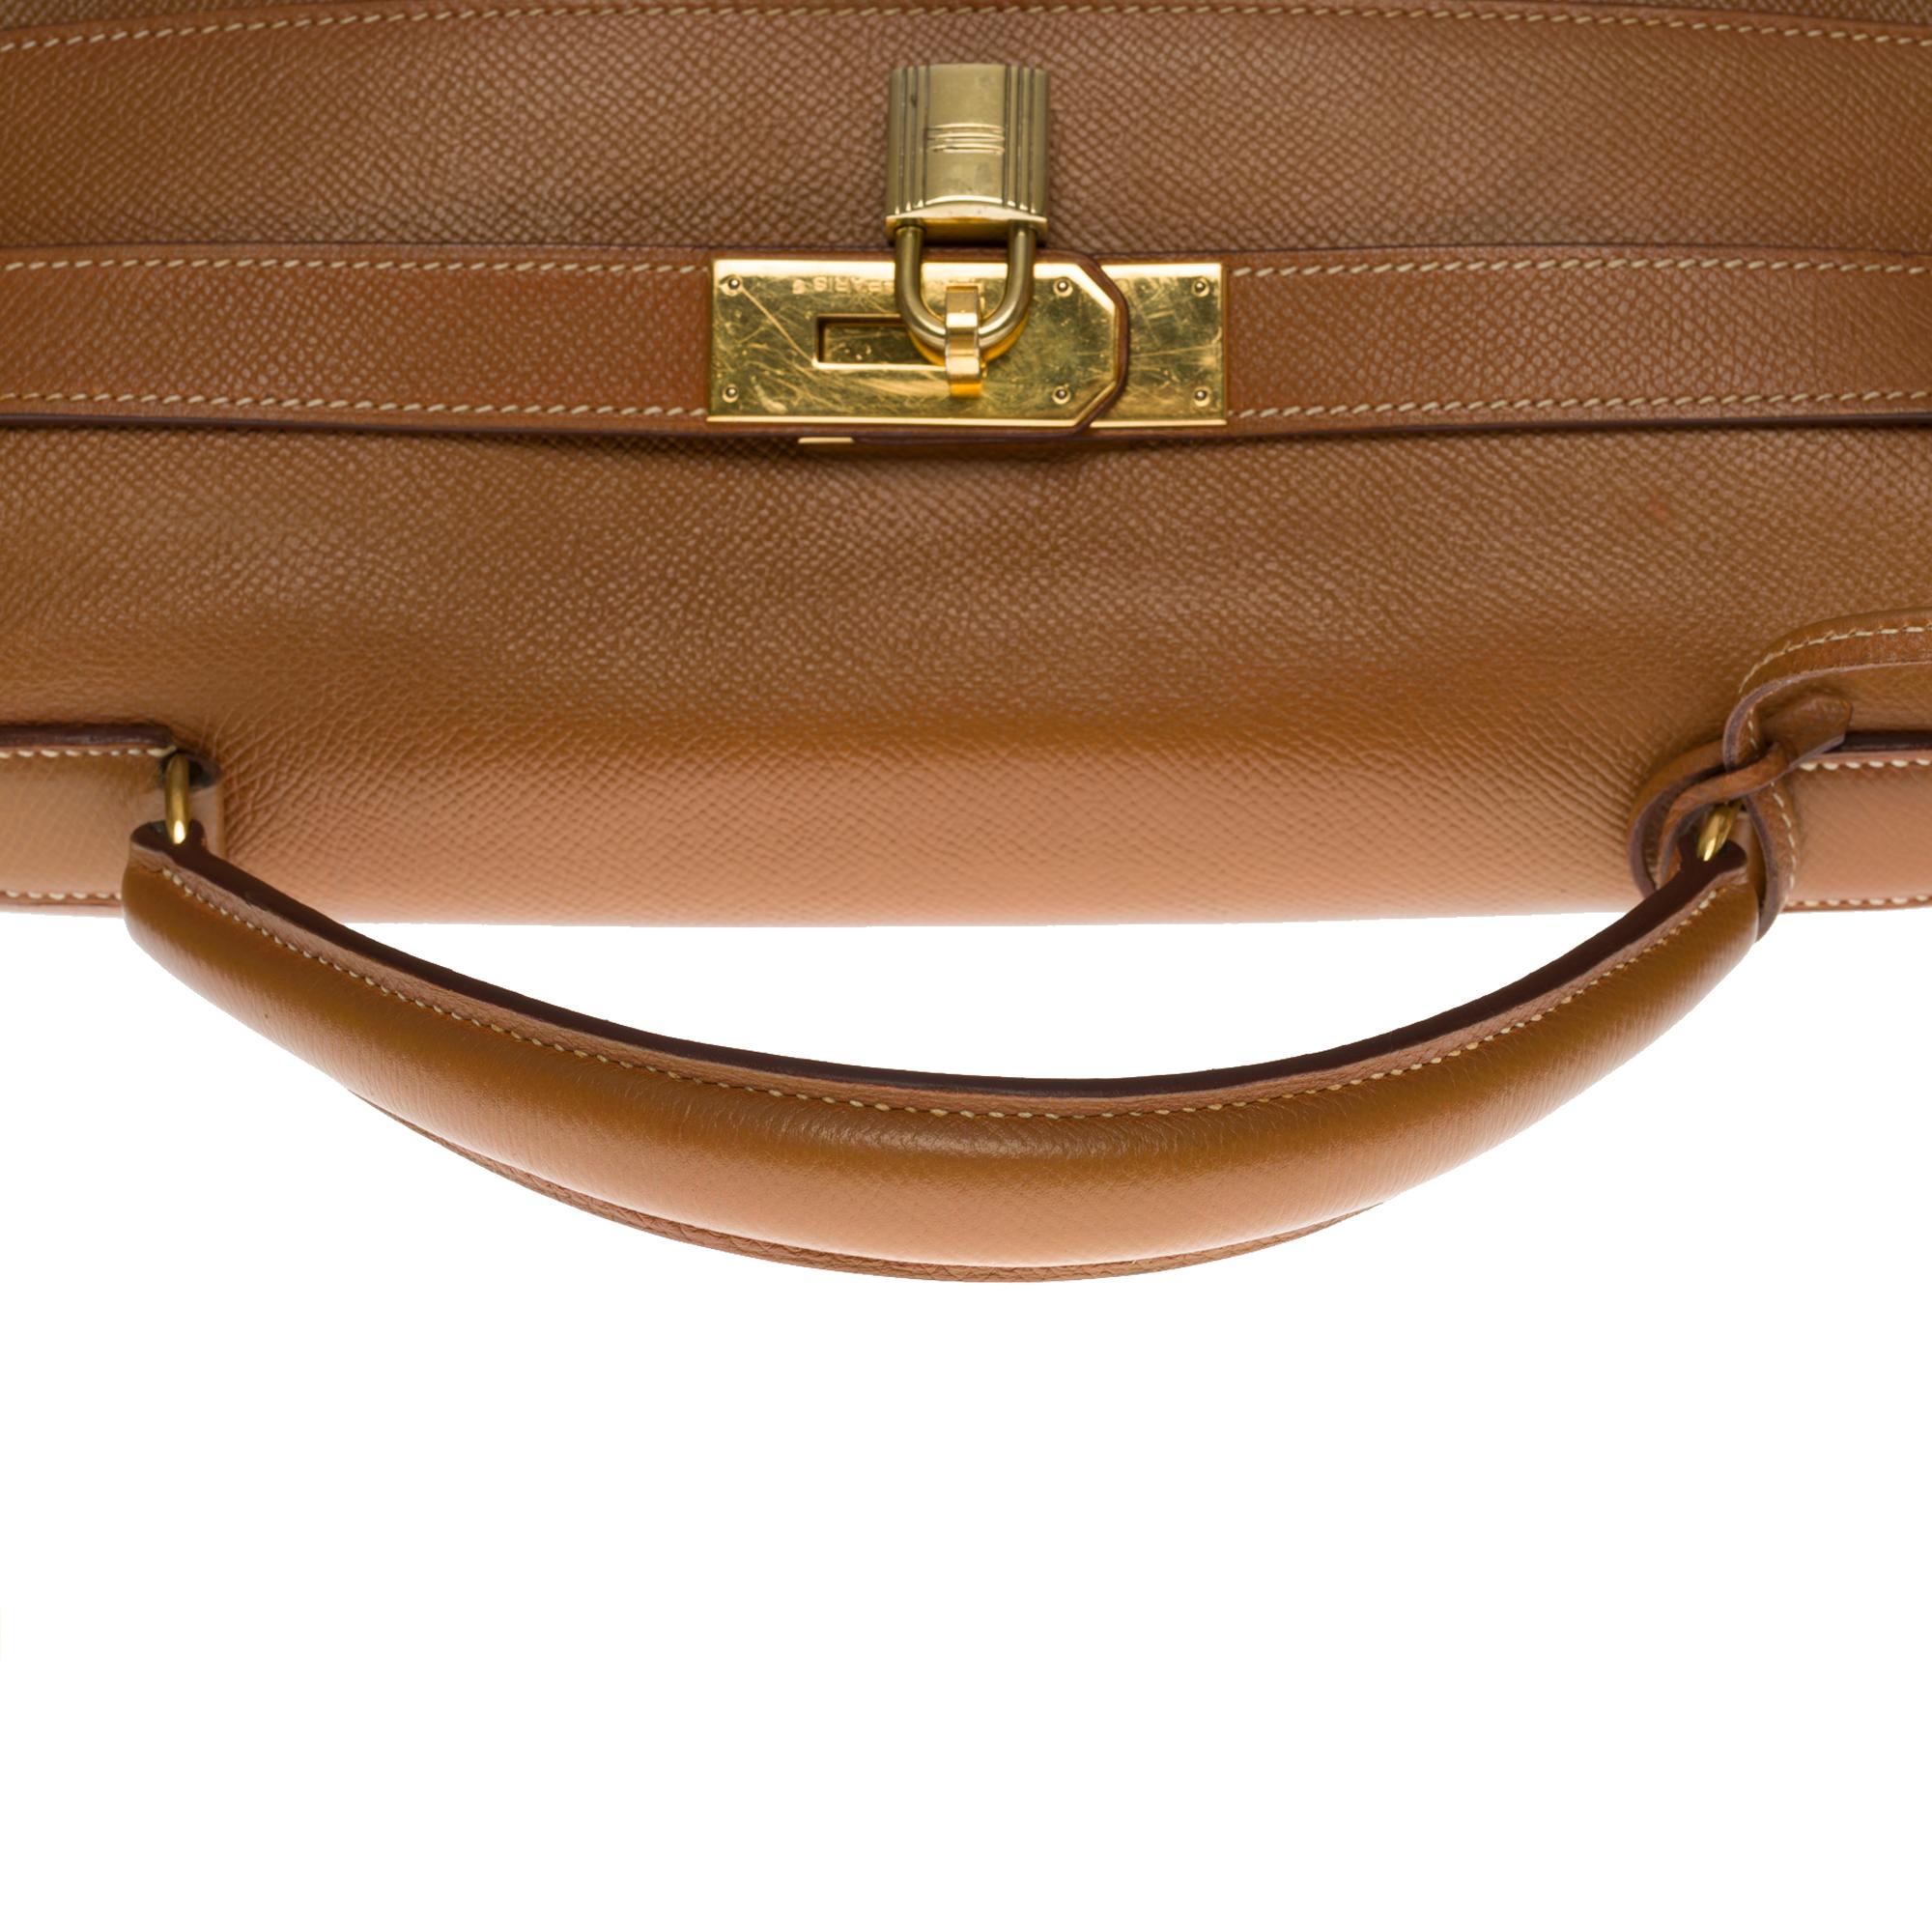 Hermes Kelly 40 retourne handbag strap in Gold Courchevel leather, GHW 3